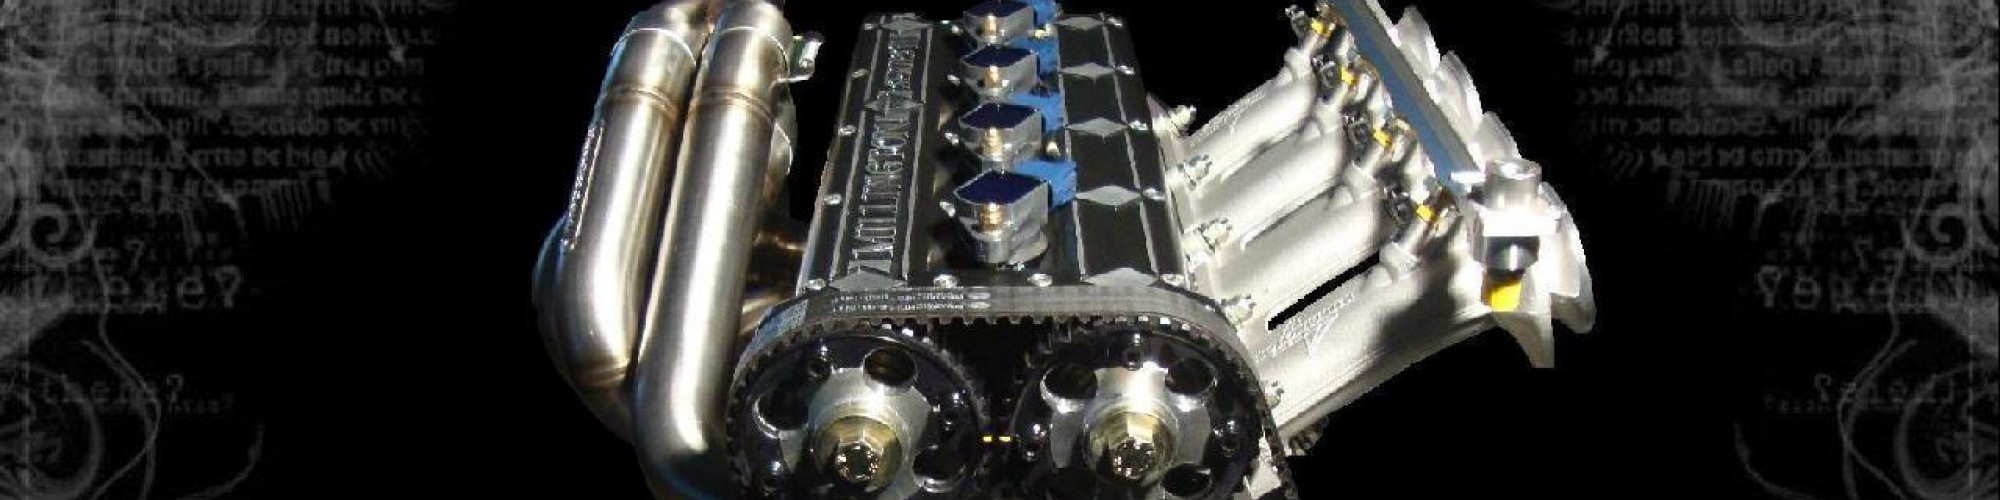 Millington Racing Engines